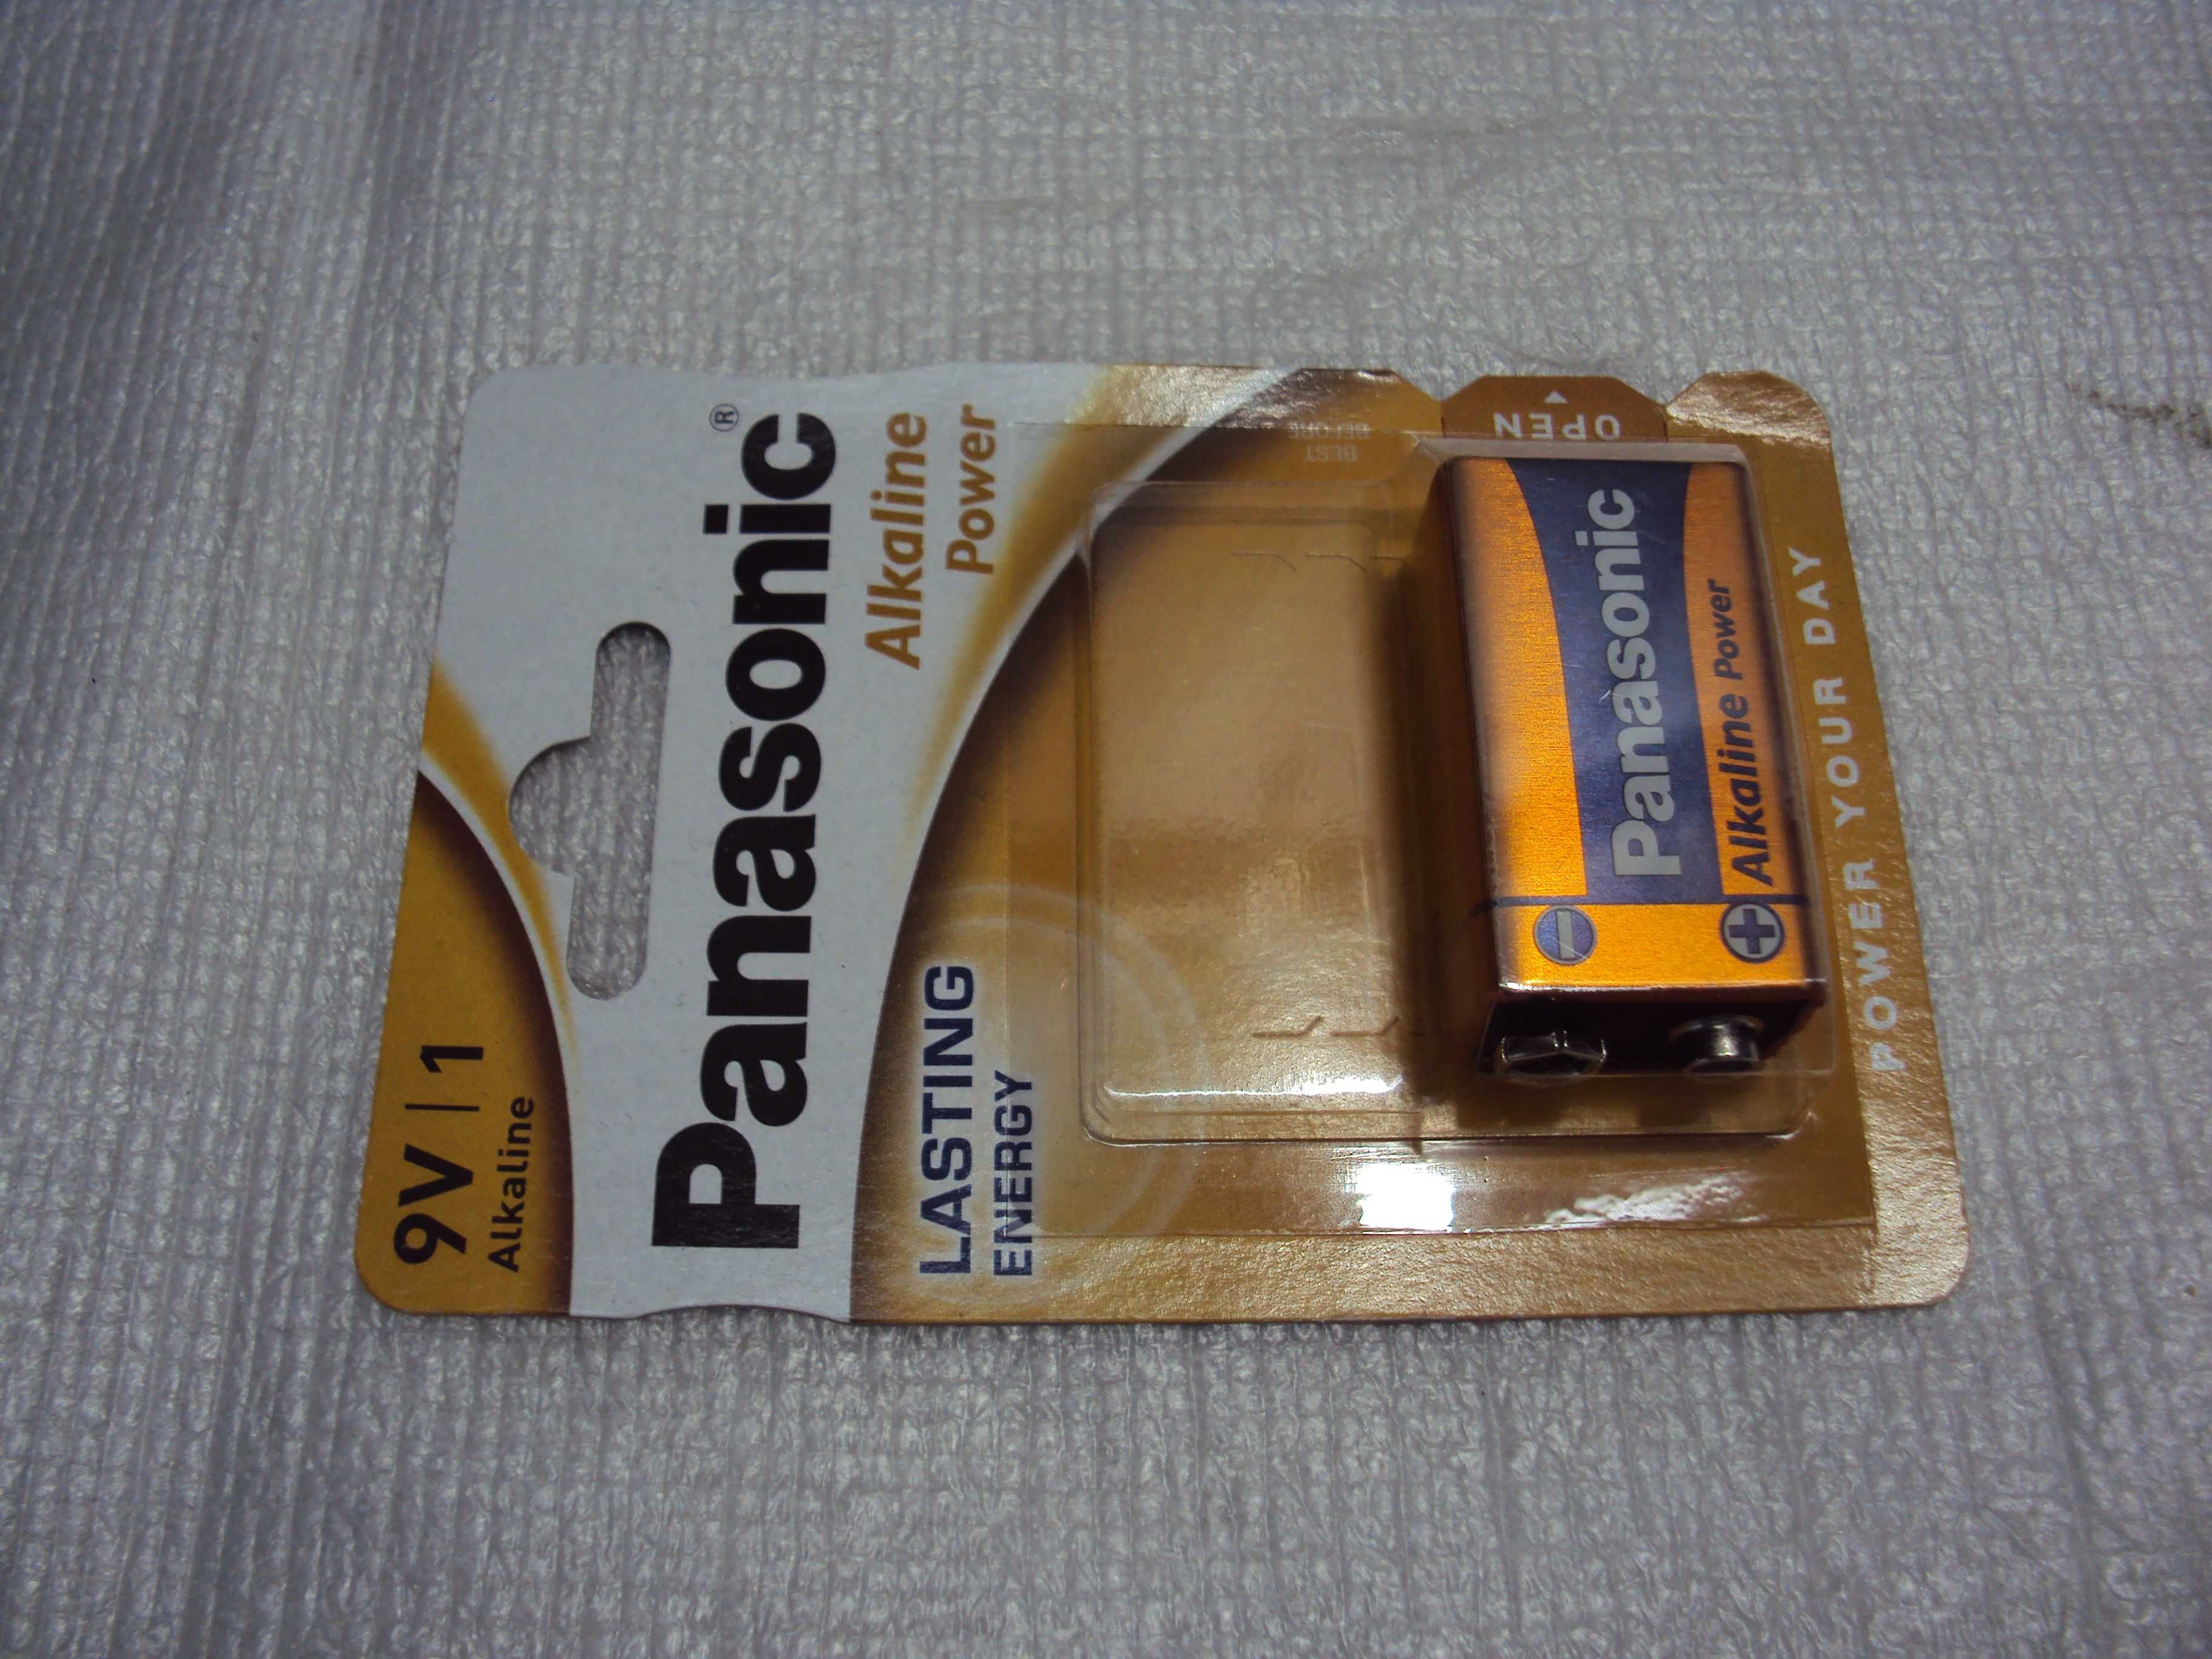 baterie Panasonic Alkaline 9v Made in Malaysia